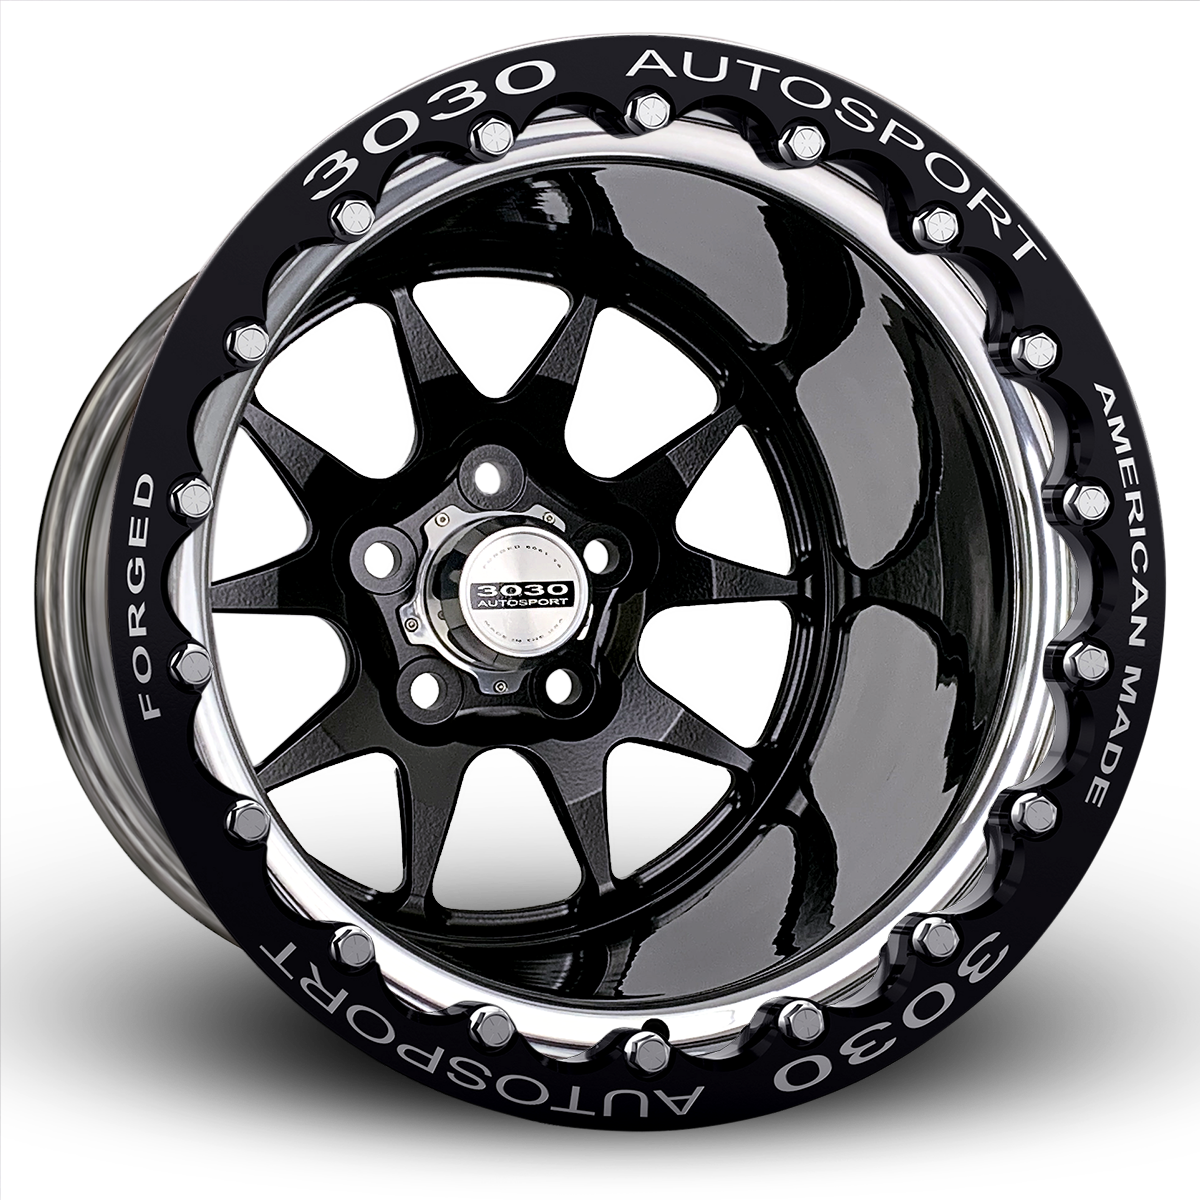 MACH-10 Double-Beadlock Wheel, Size: 15x12", Bolt Pattern: 5x4.5", Backspace: 6" [Black/Polished]